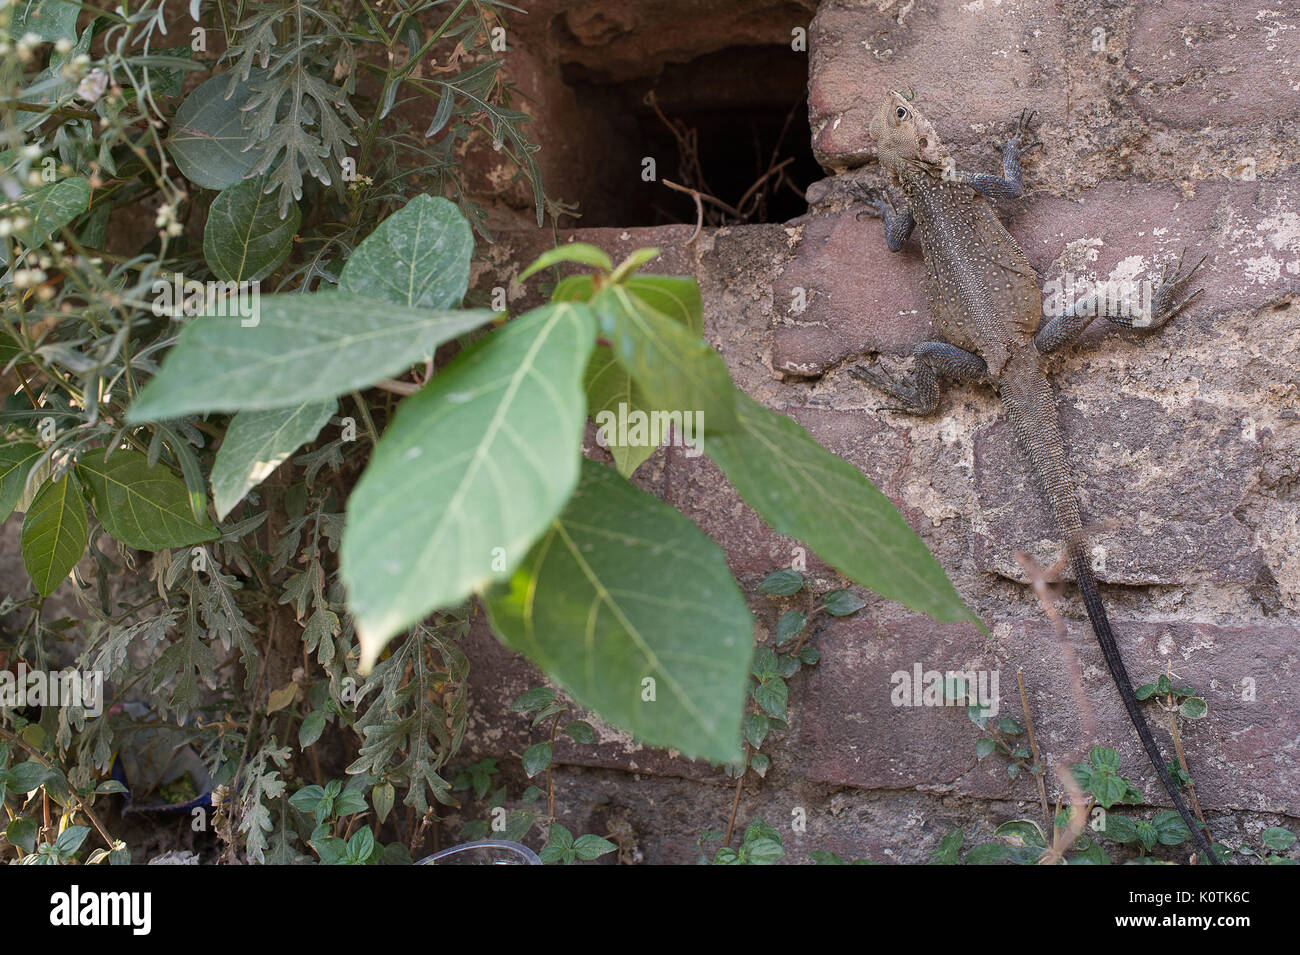 Kashmir Rock Agama , Laudakia tuberculata, Agamidae, Rishikesh, India Stock Photo